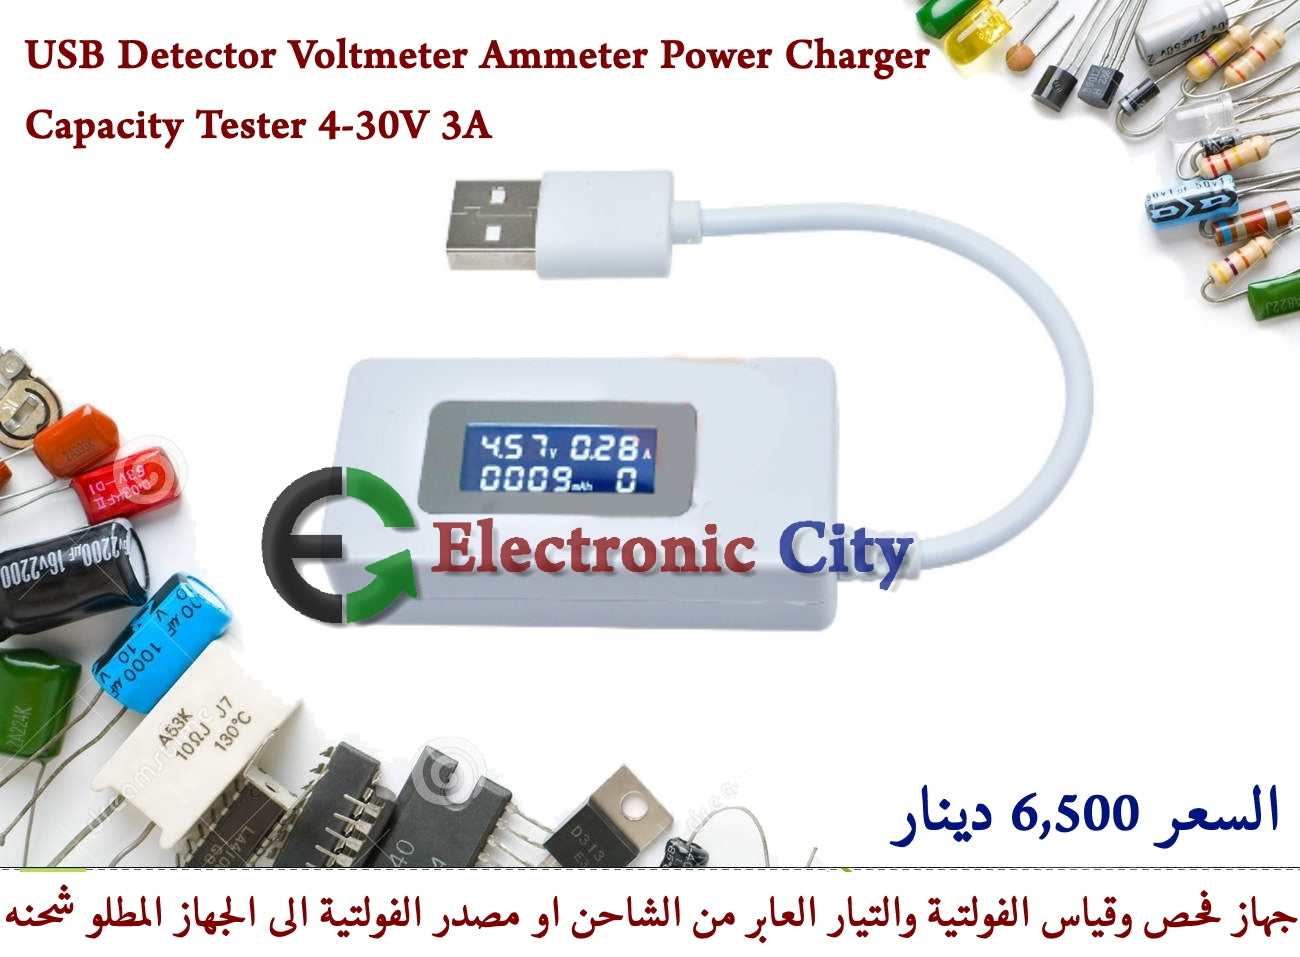 USB Detector Voltmeter Ammeter Power Charger Capacity Tester 4-30V 3A #G7 050933